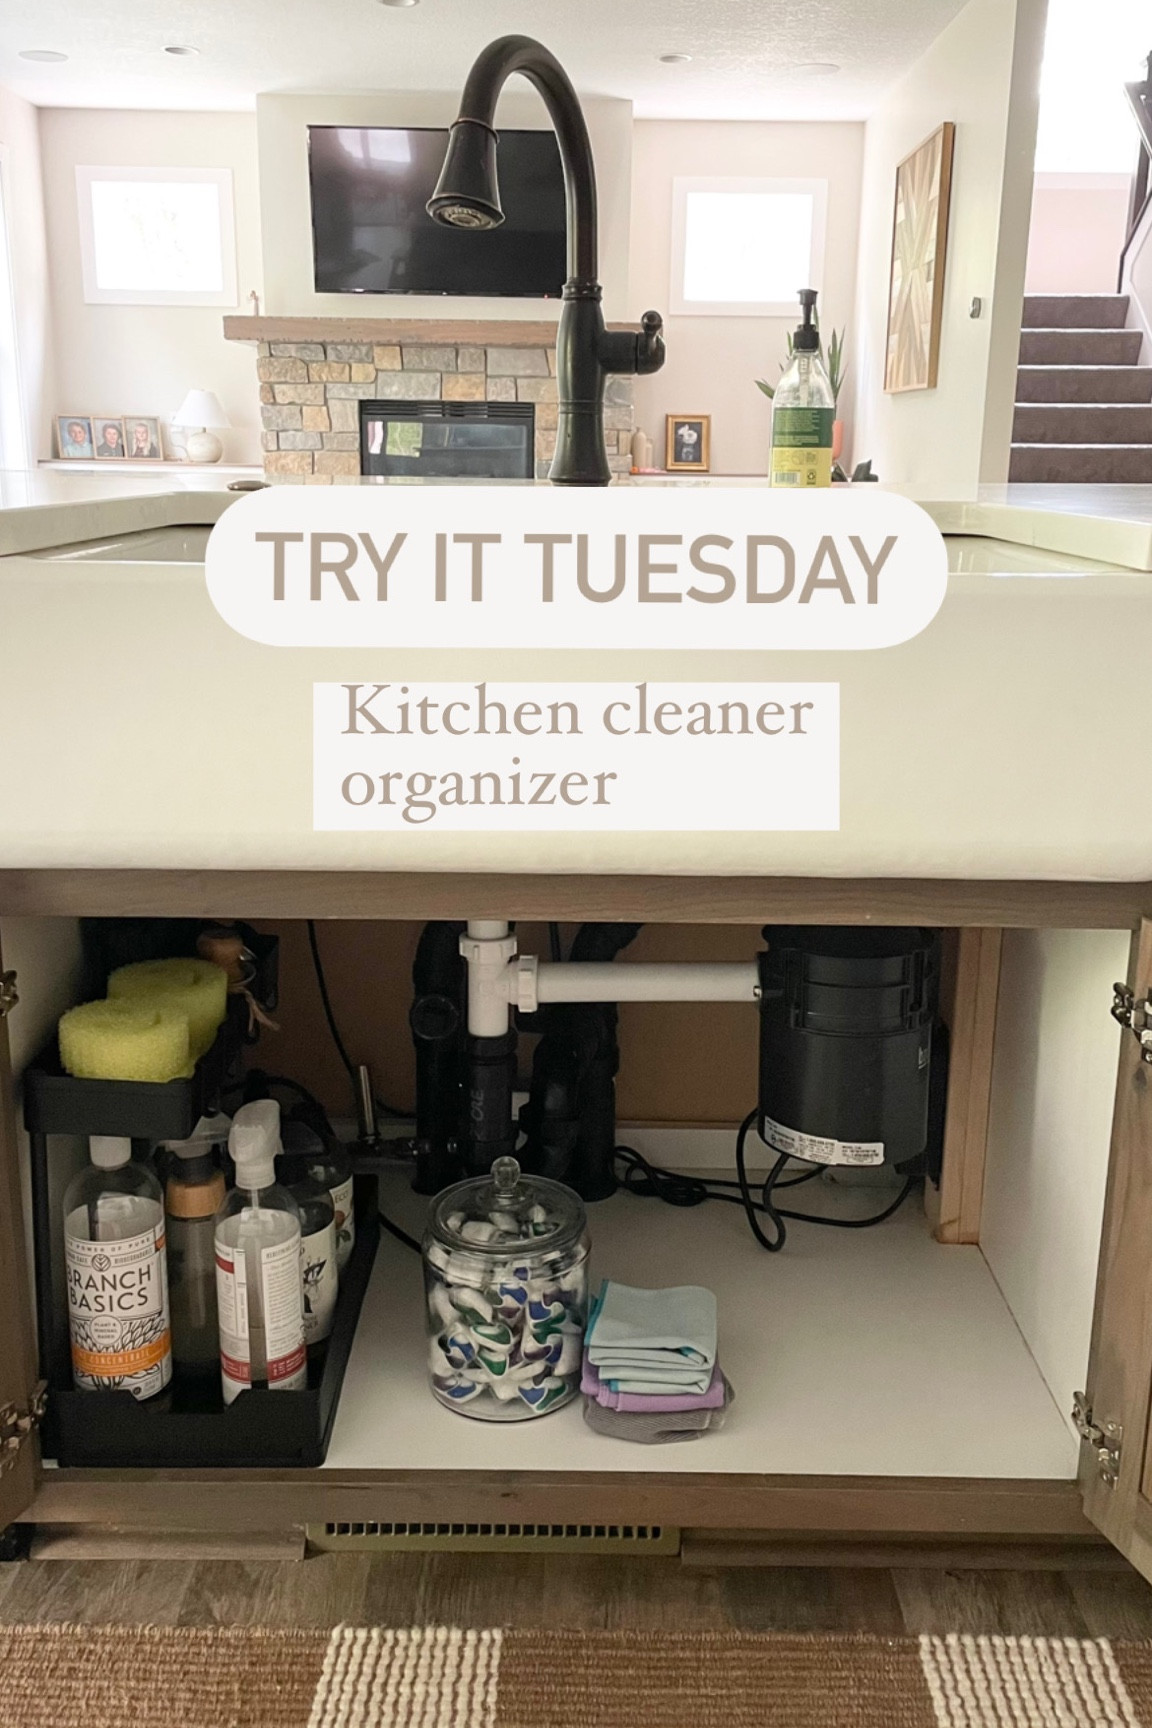  Zyerch 2 Pack Under Sink Organizer,Metal Pull Out Kitchen  Cabinet Organizer with Sliding Drawer,Sturdy Multi-Functional for Bathroom  Organization,Black